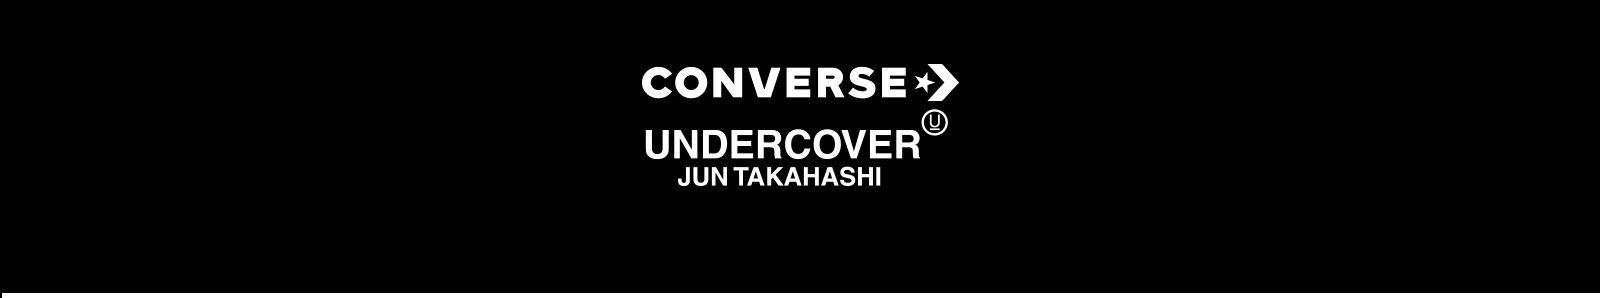 Jun Takahashi Undercover Logo - Converse Undercover | Limited Edition. Converse.com